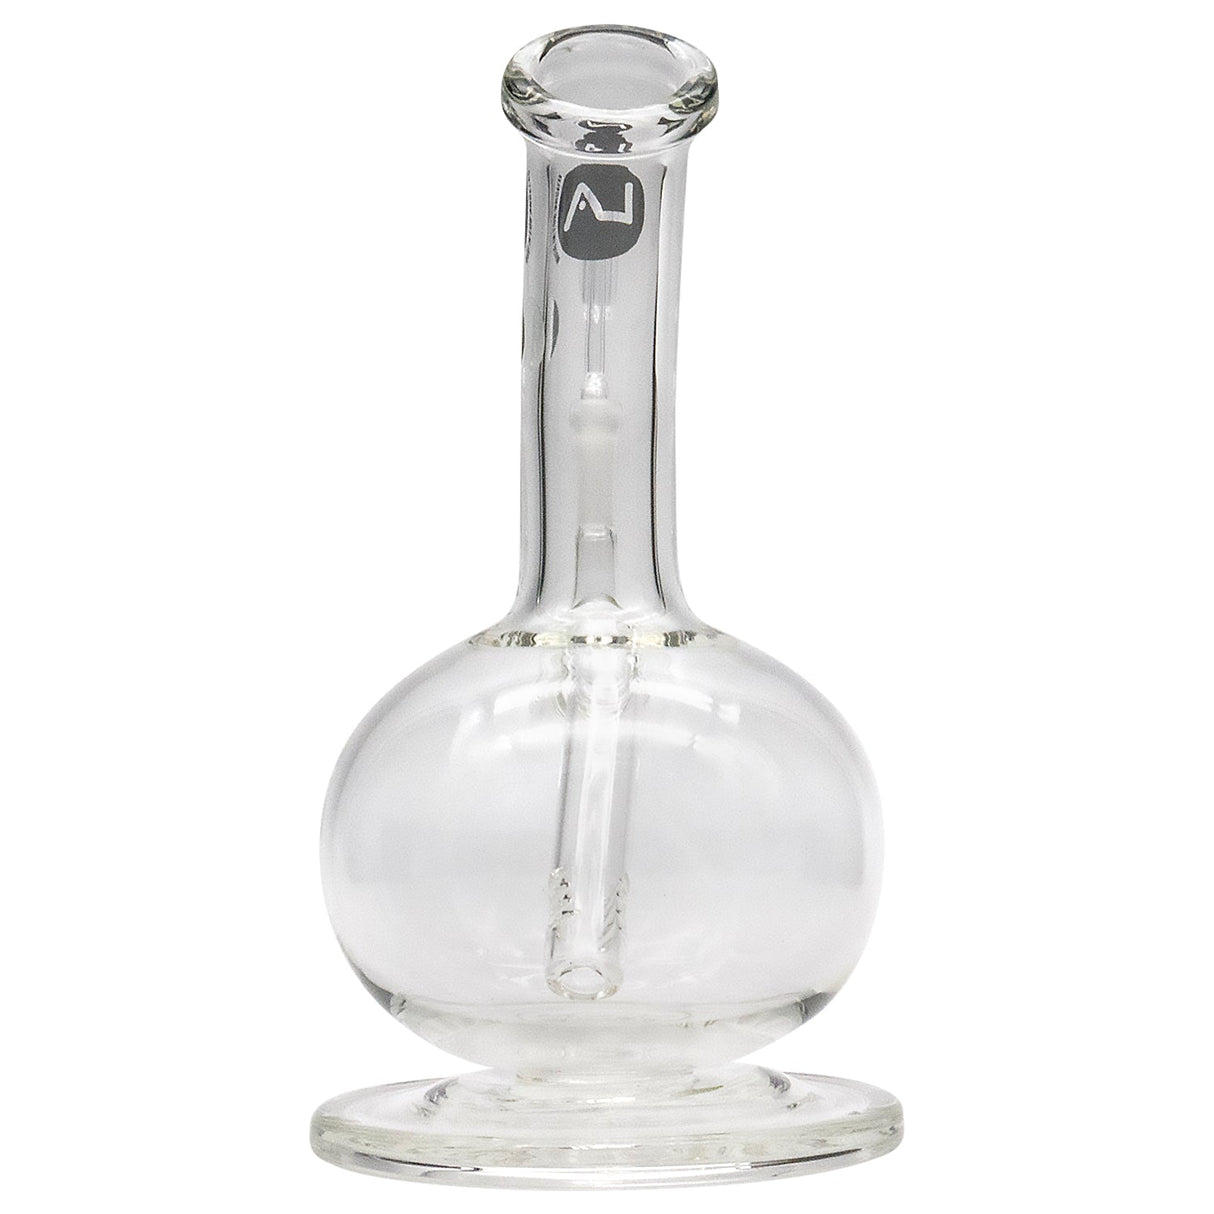 LA Pipes Bubble Base Concentrate Rig, 6" Borosilicate Glass, Front View